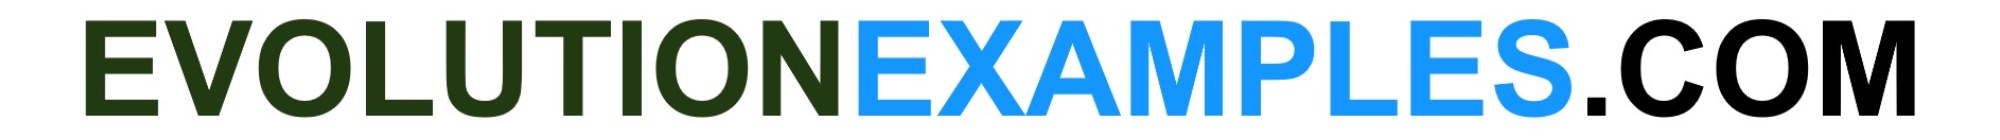 EvolutionExamples logo